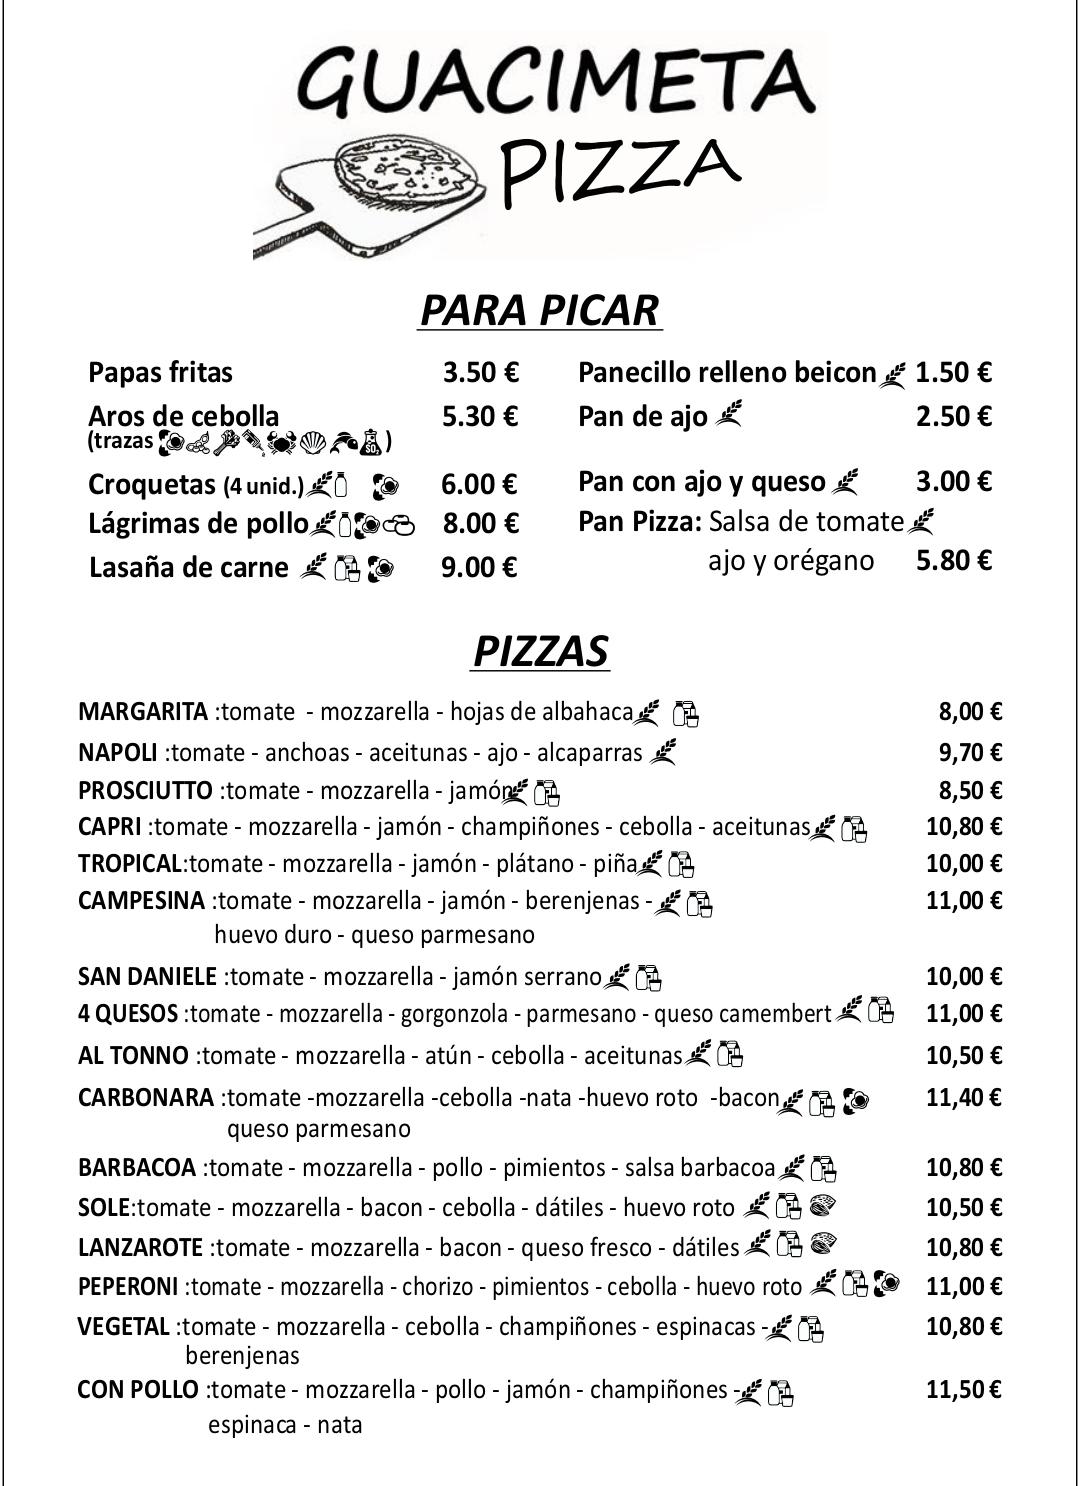 Images Guacimeta Pizza